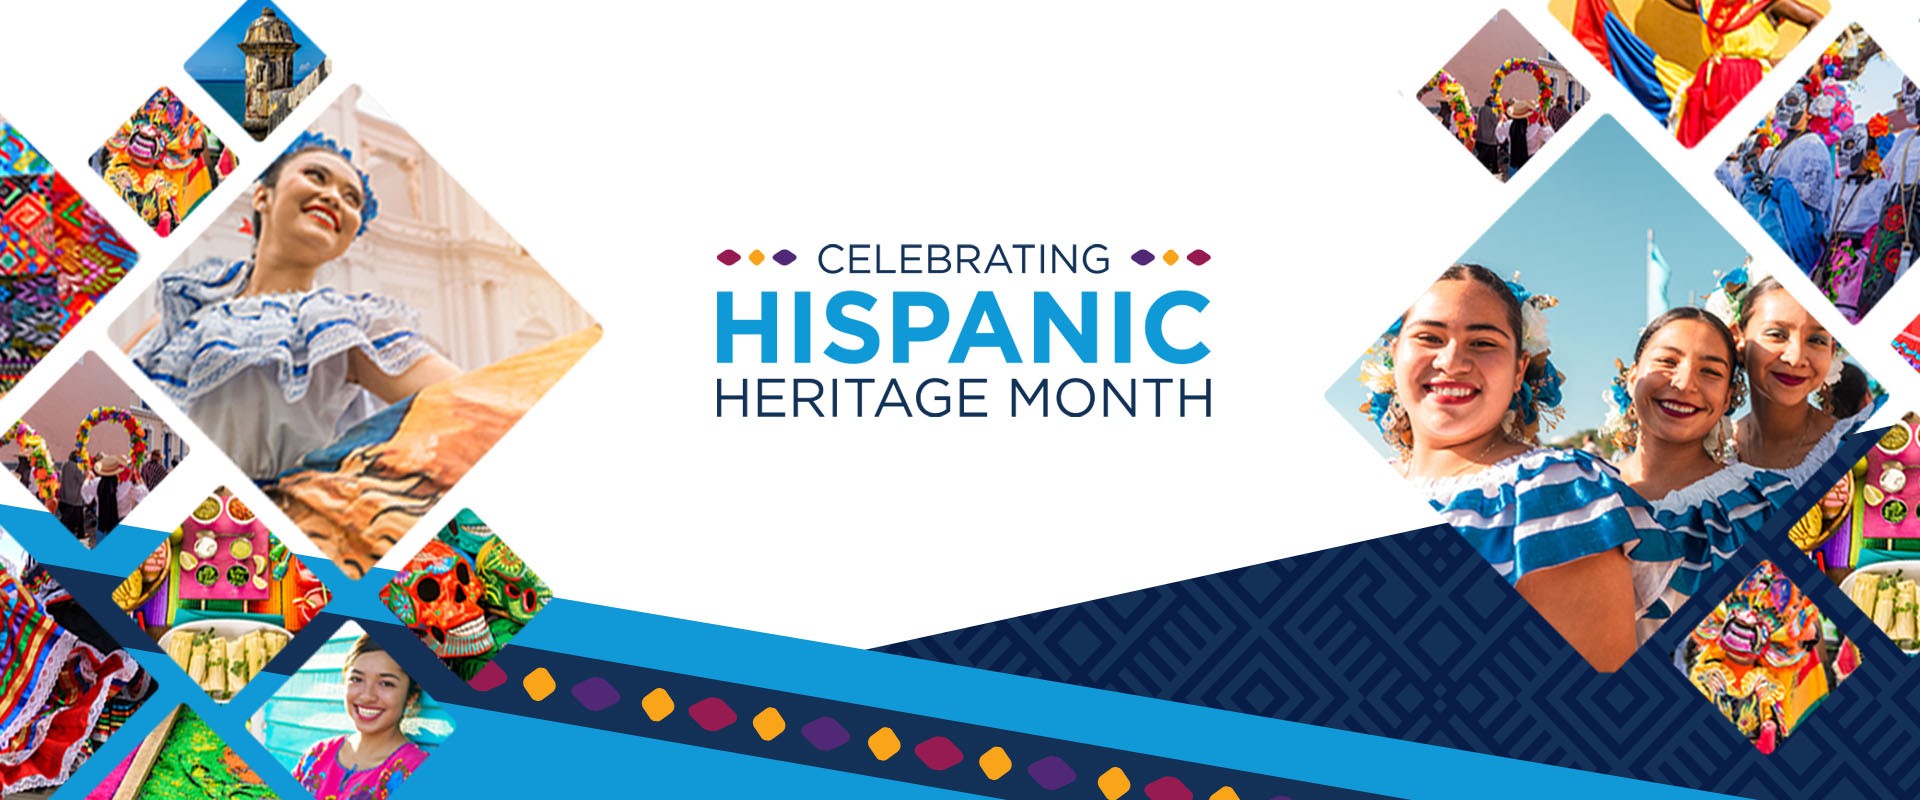 Hispanic Heritage Month logo and photos collage